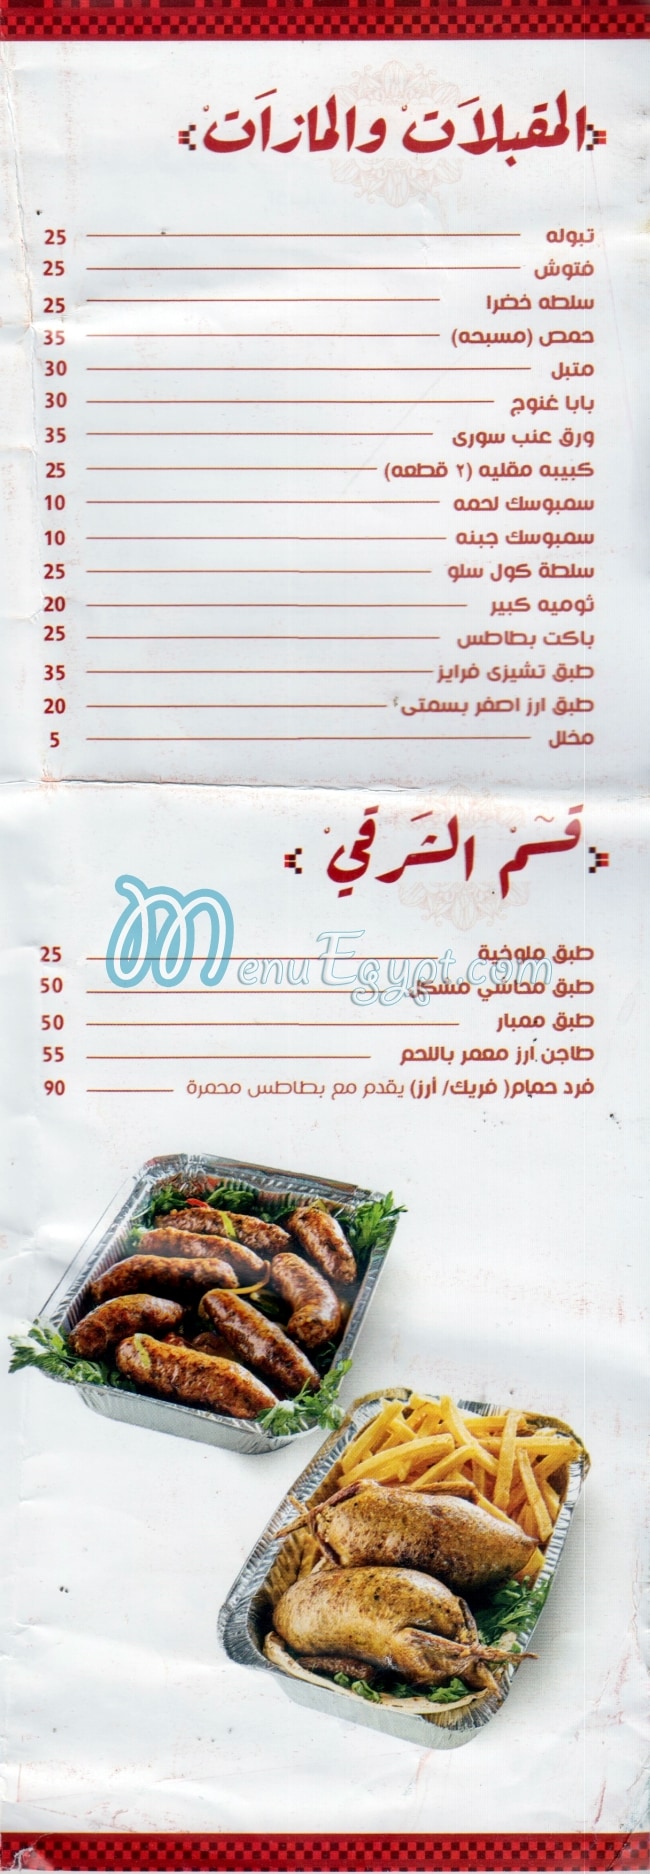 Fayroz delivery menu